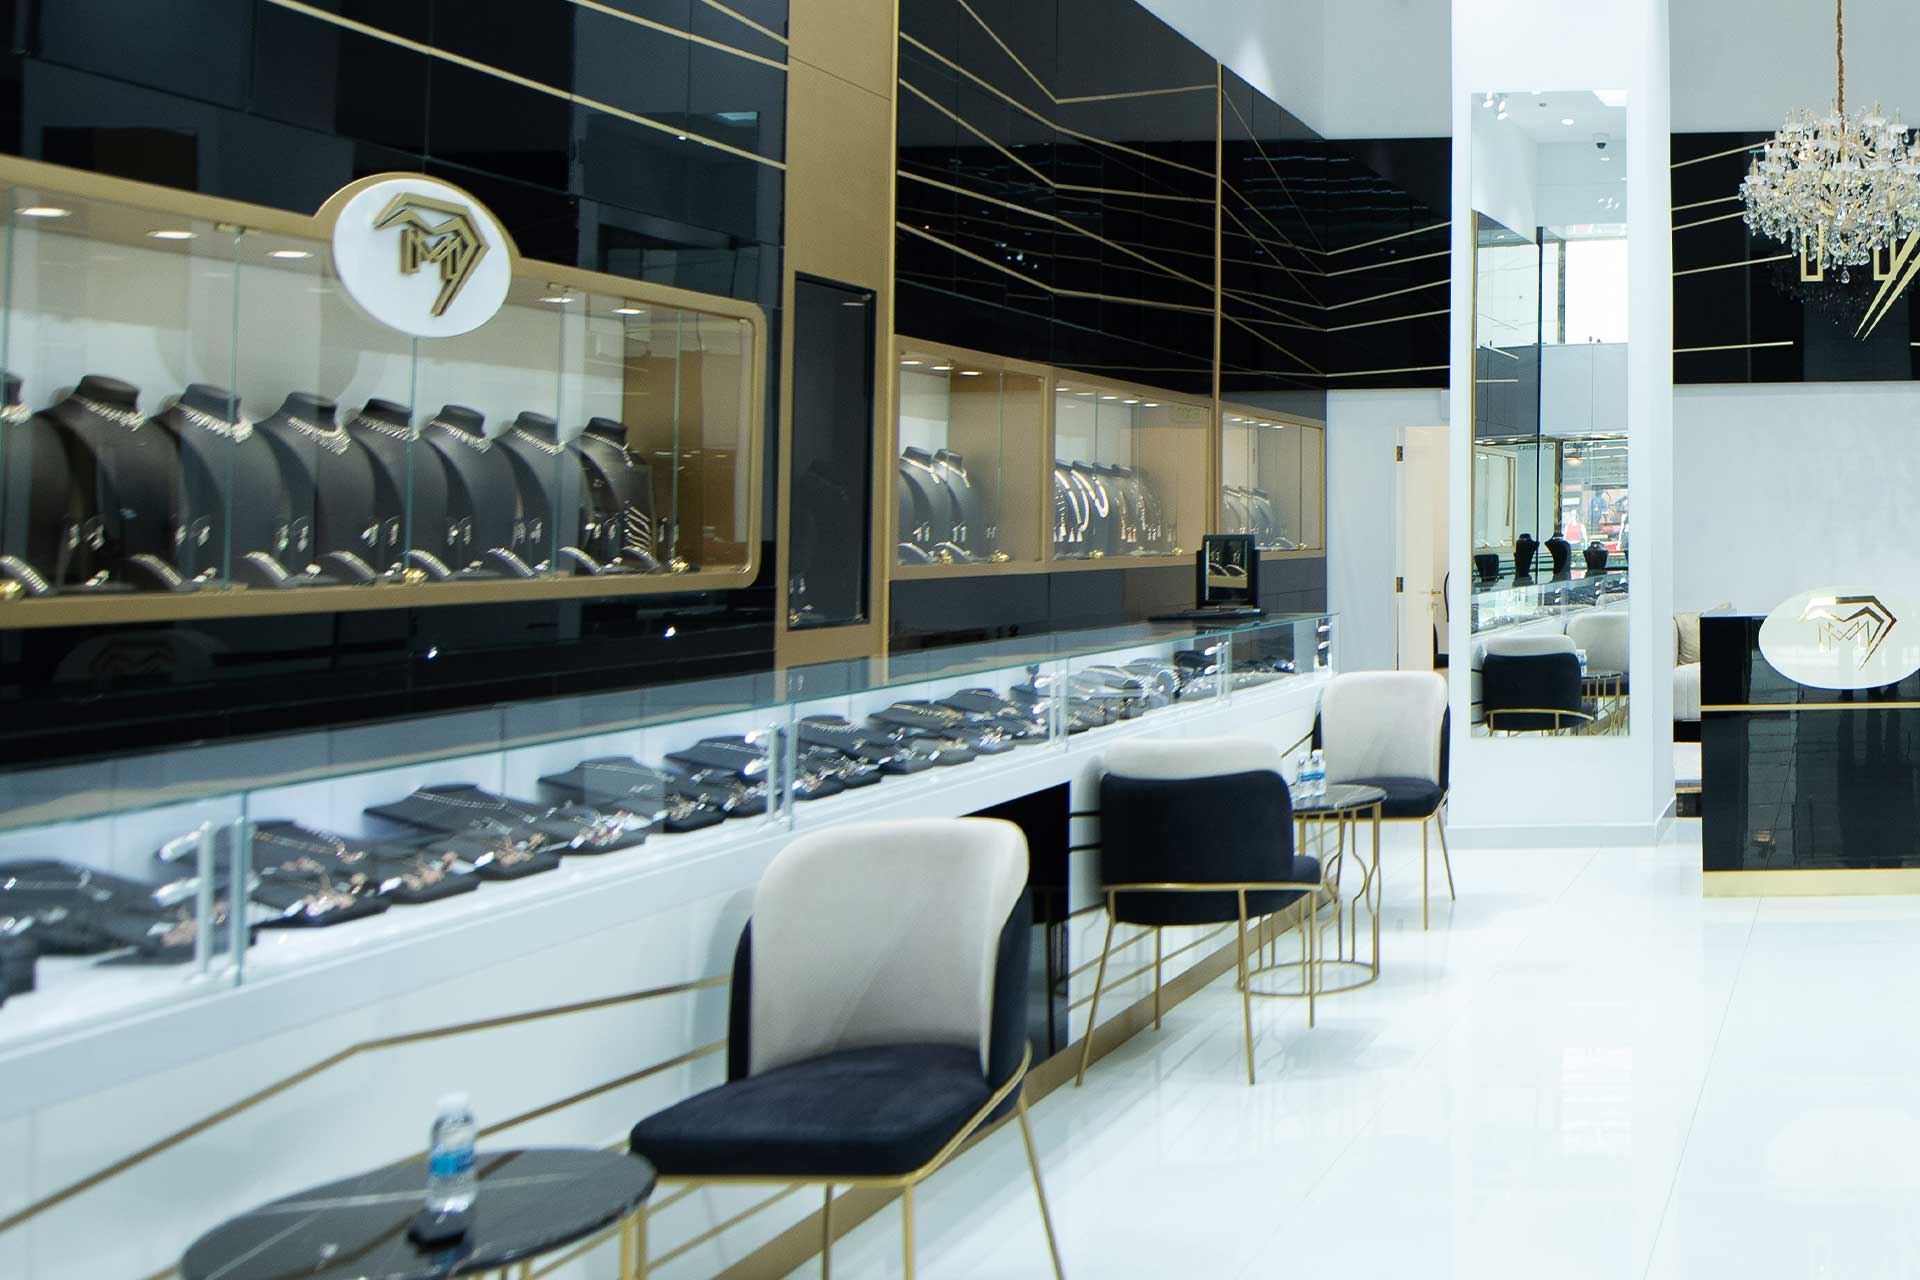 Luxurious Interior of Mattar Jewelers Shop, Vendome Mall, Qatar - Image 4